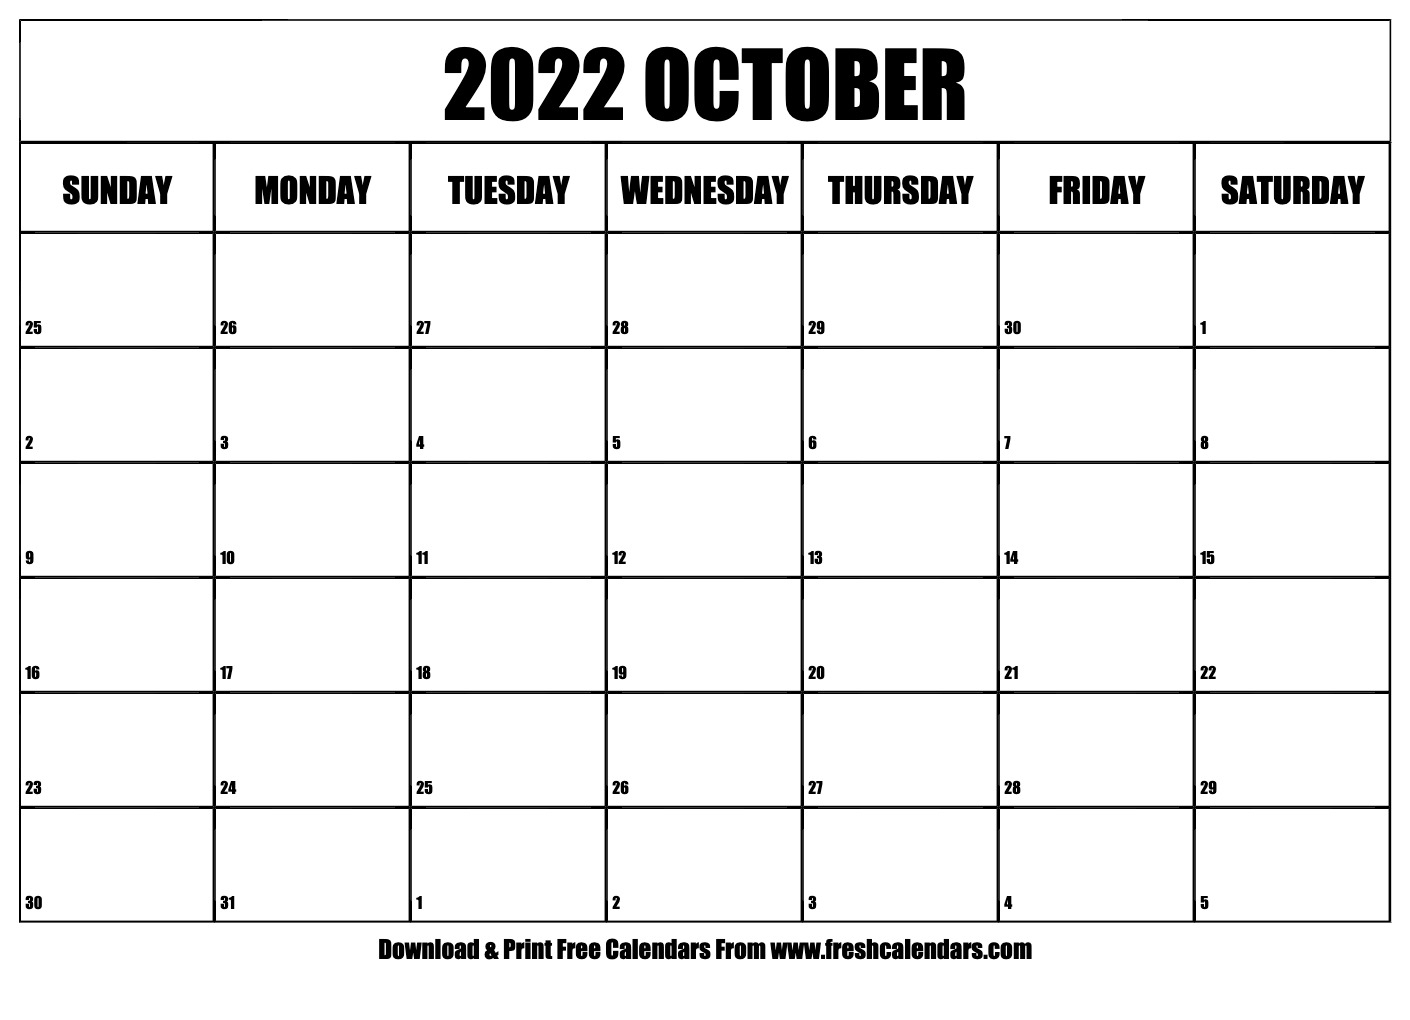 Take October 2022 Holiday Calendar